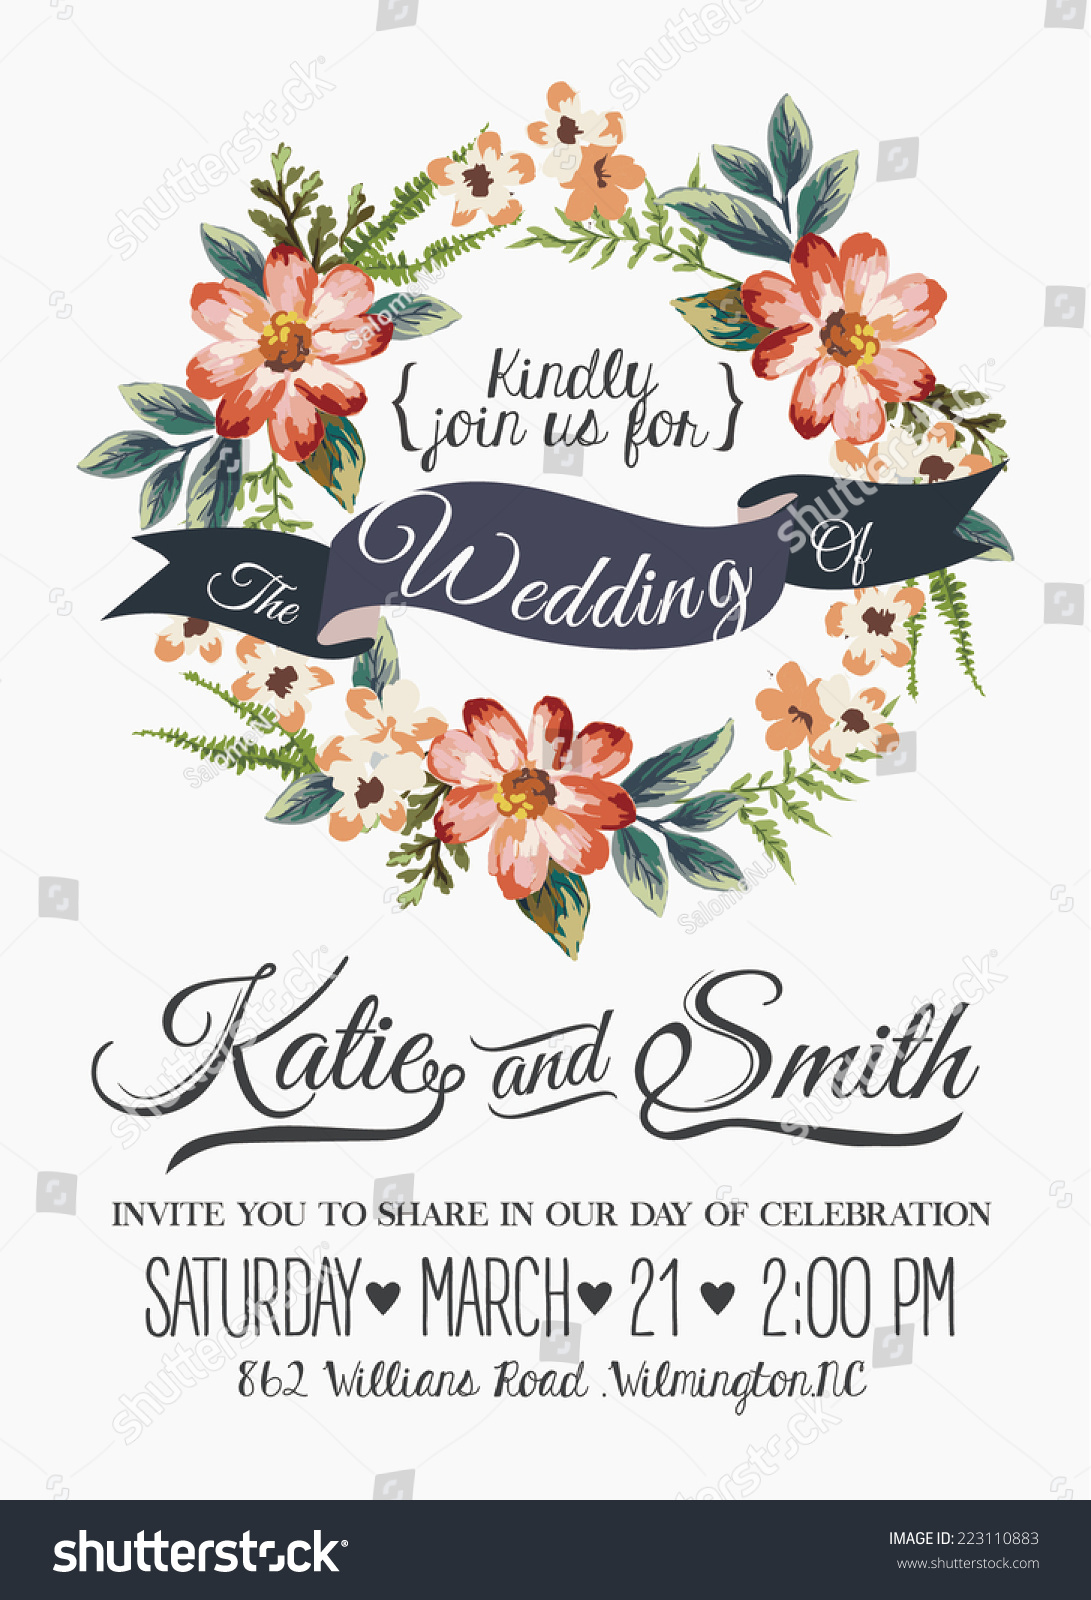 Wedding Invitation Card Romantic Flower Templates Stock Vector 223110883 - Shutterstock1091 x 1600